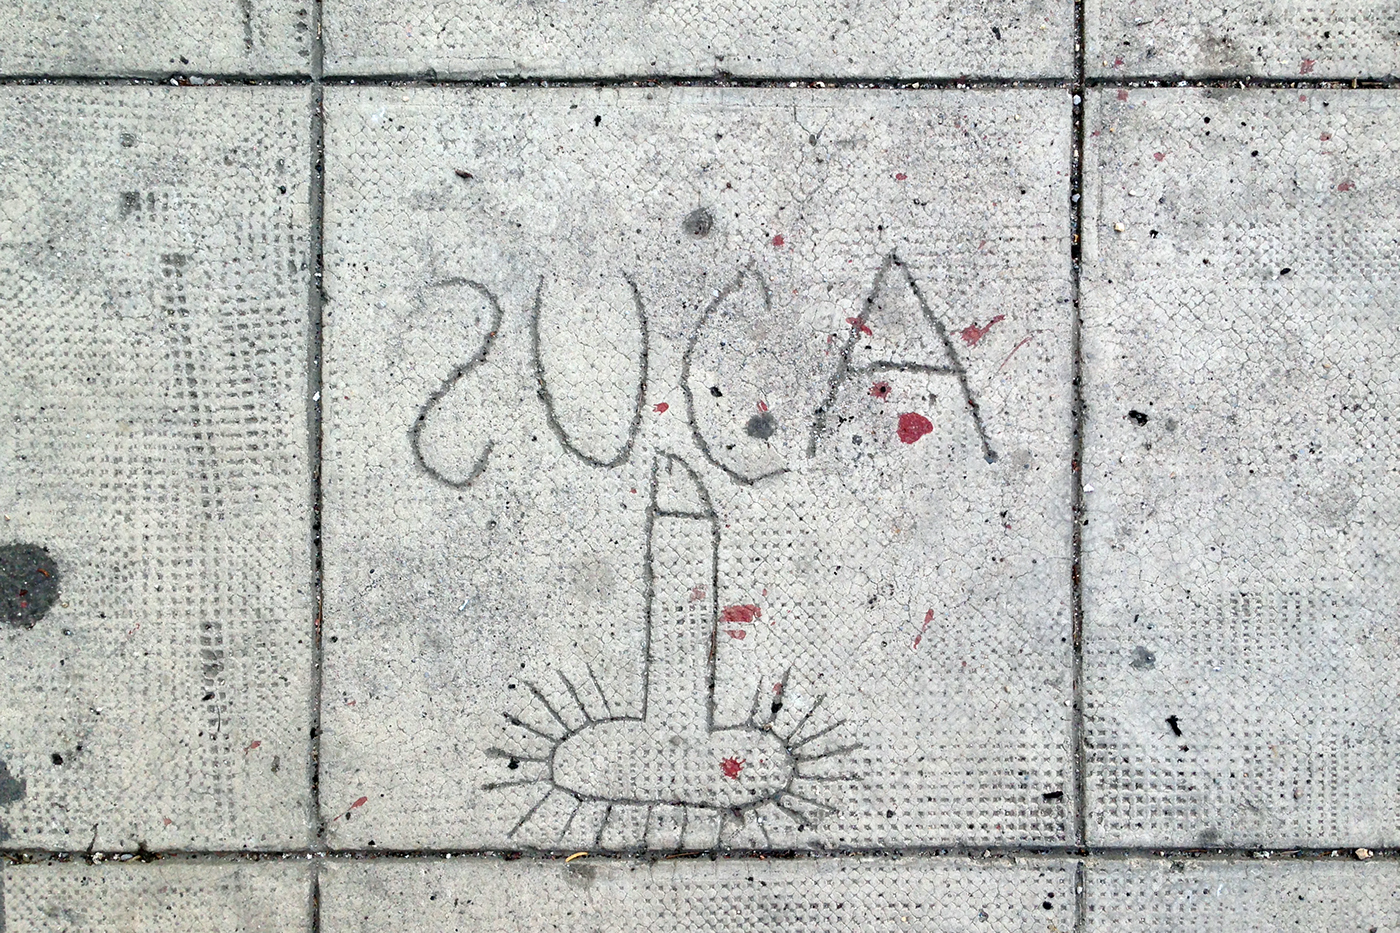 suca suca forte 800A insult Palermo sicily walls spray writings